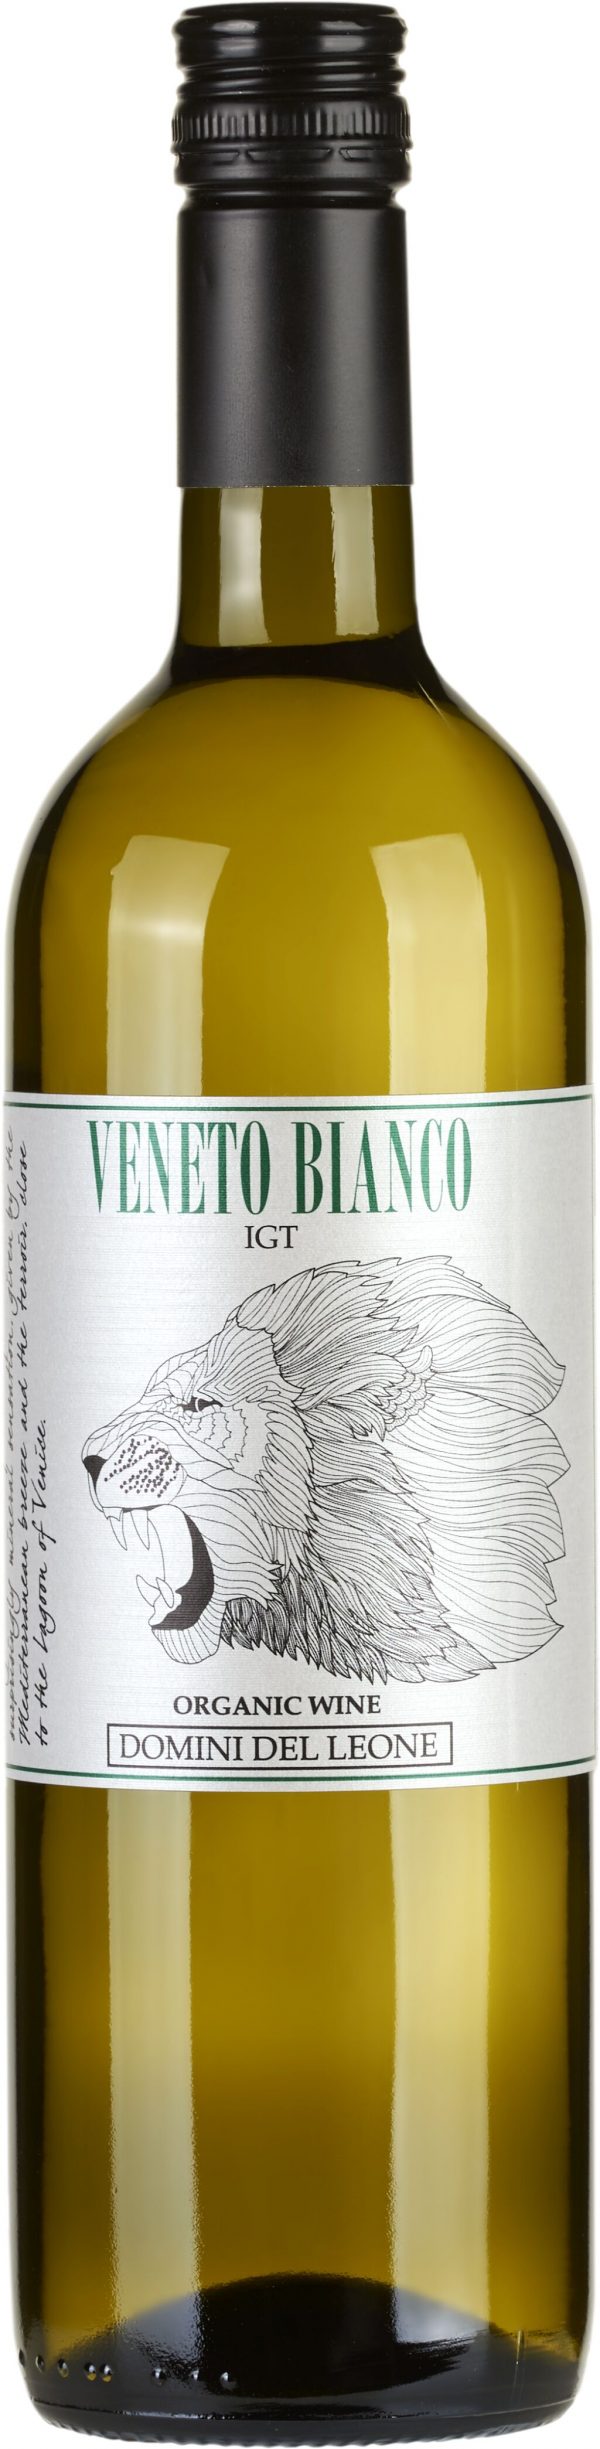 Veneto Bianco IGT Organic